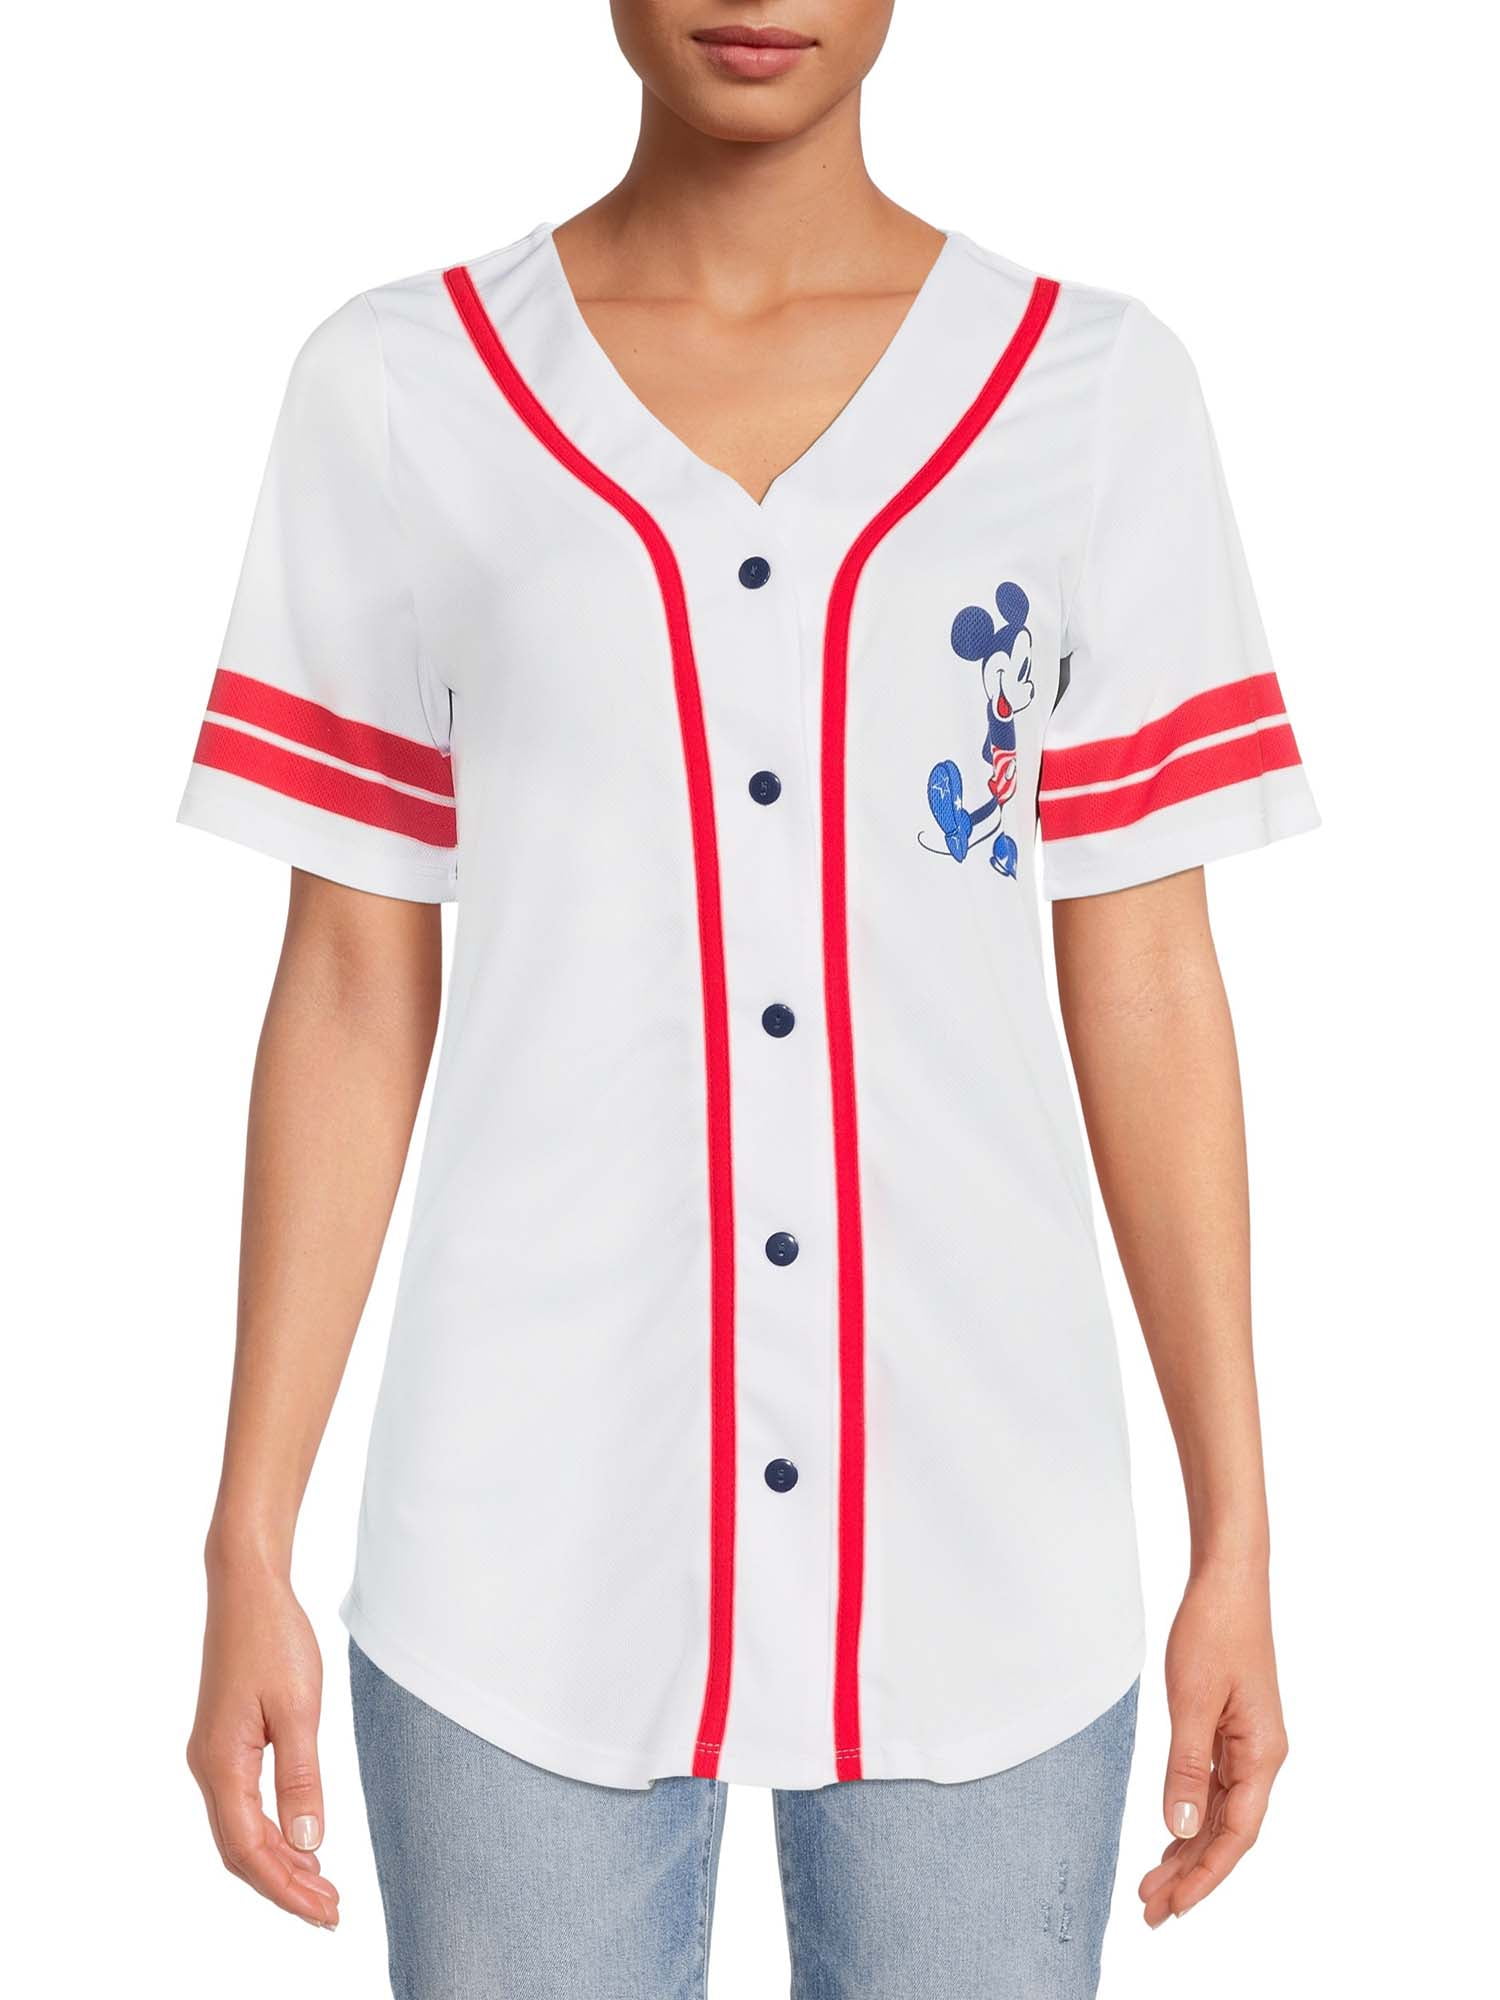 Mickey Mouse Juniors' Baseball Jersey 